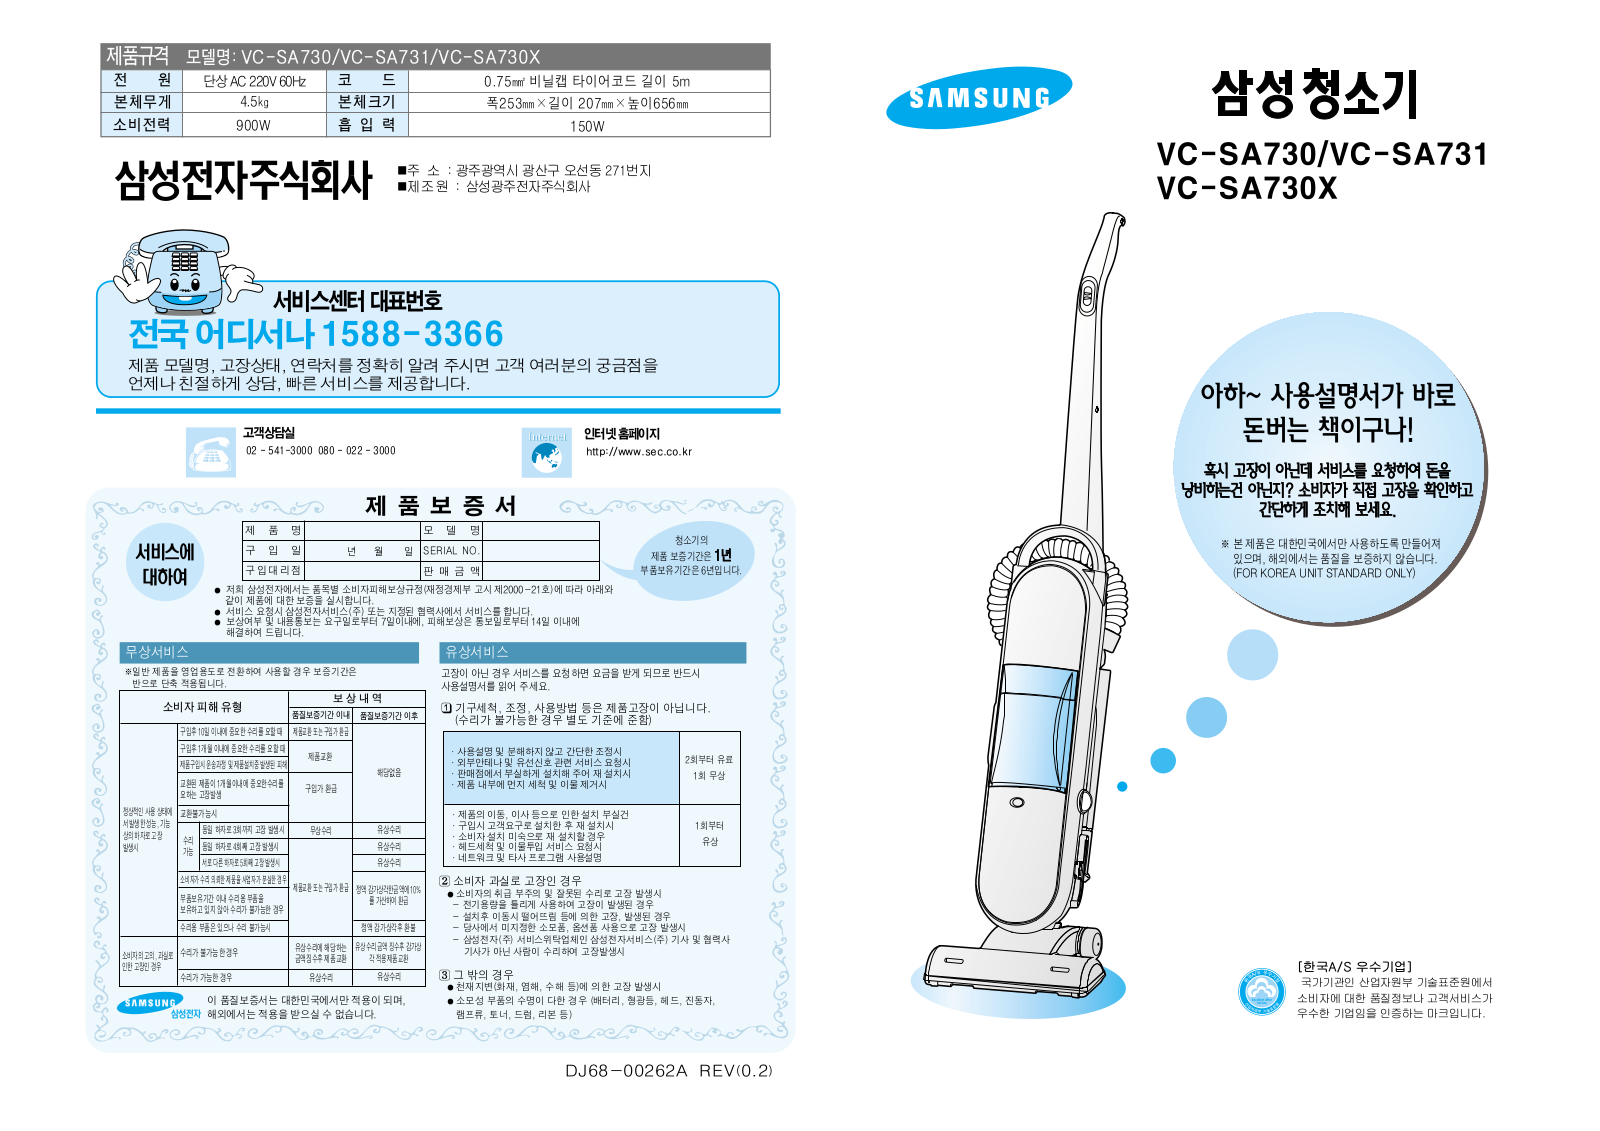 Samsung VC-SA730X, VC-SA731, VC-SA730 User Manual